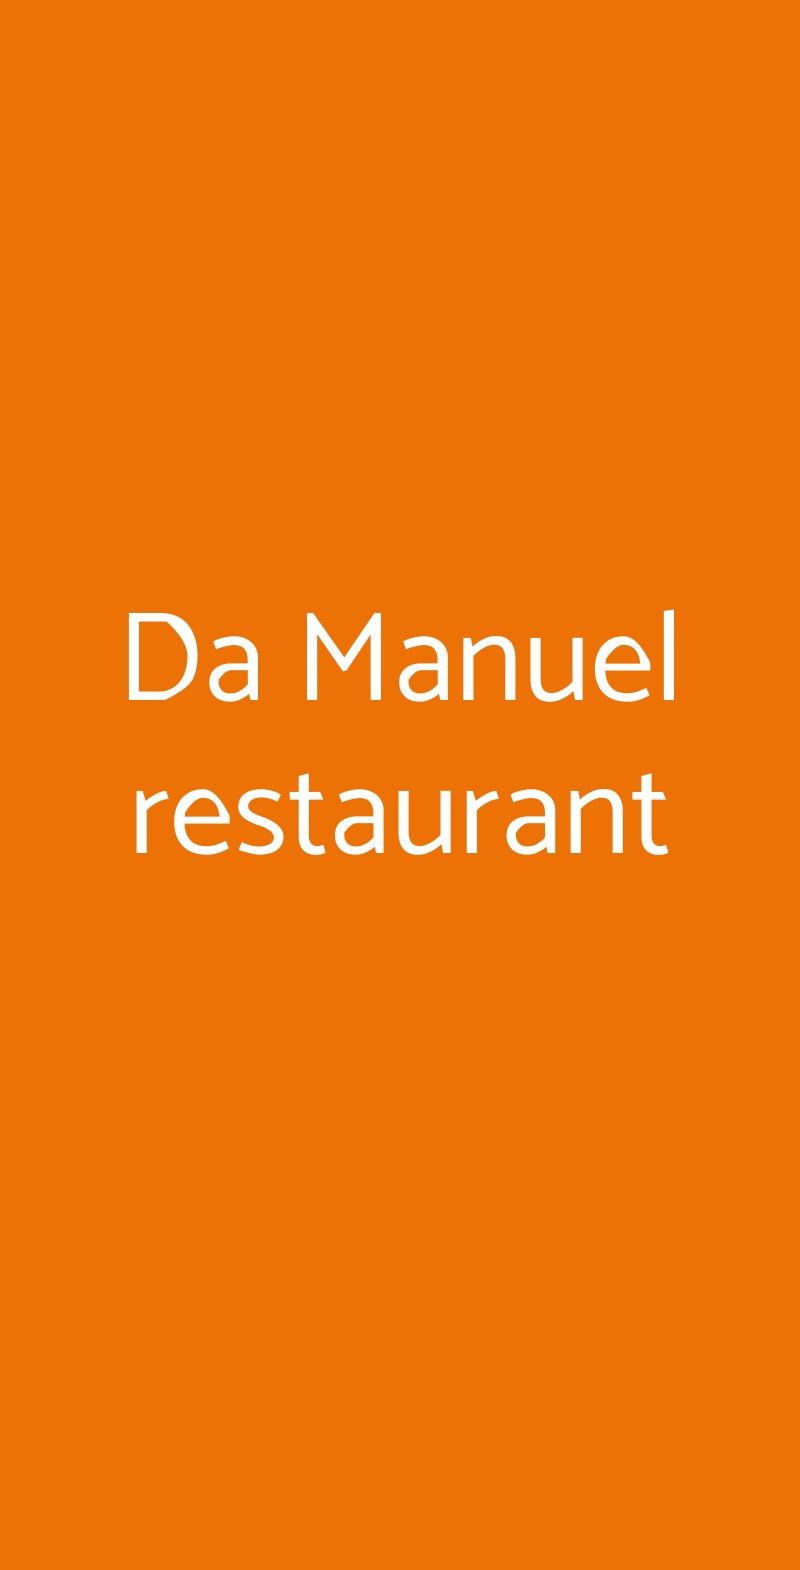 Da Manuel restaurant Pisa menù 1 pagina